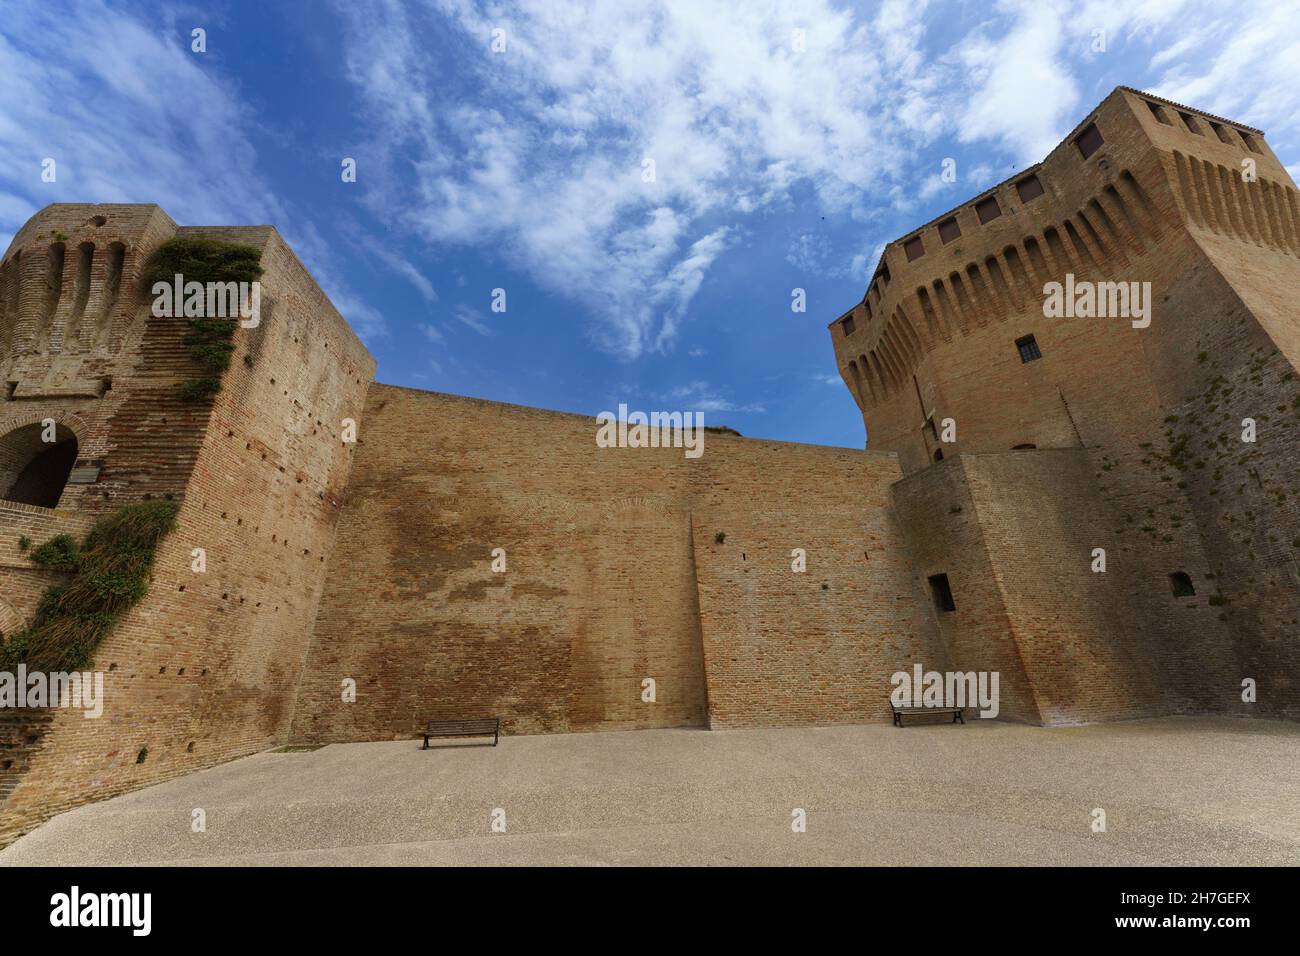 Mondavio, Pesaro e Urbino province, Marche, Italy: medieval city surrounded by walls Stock Photo